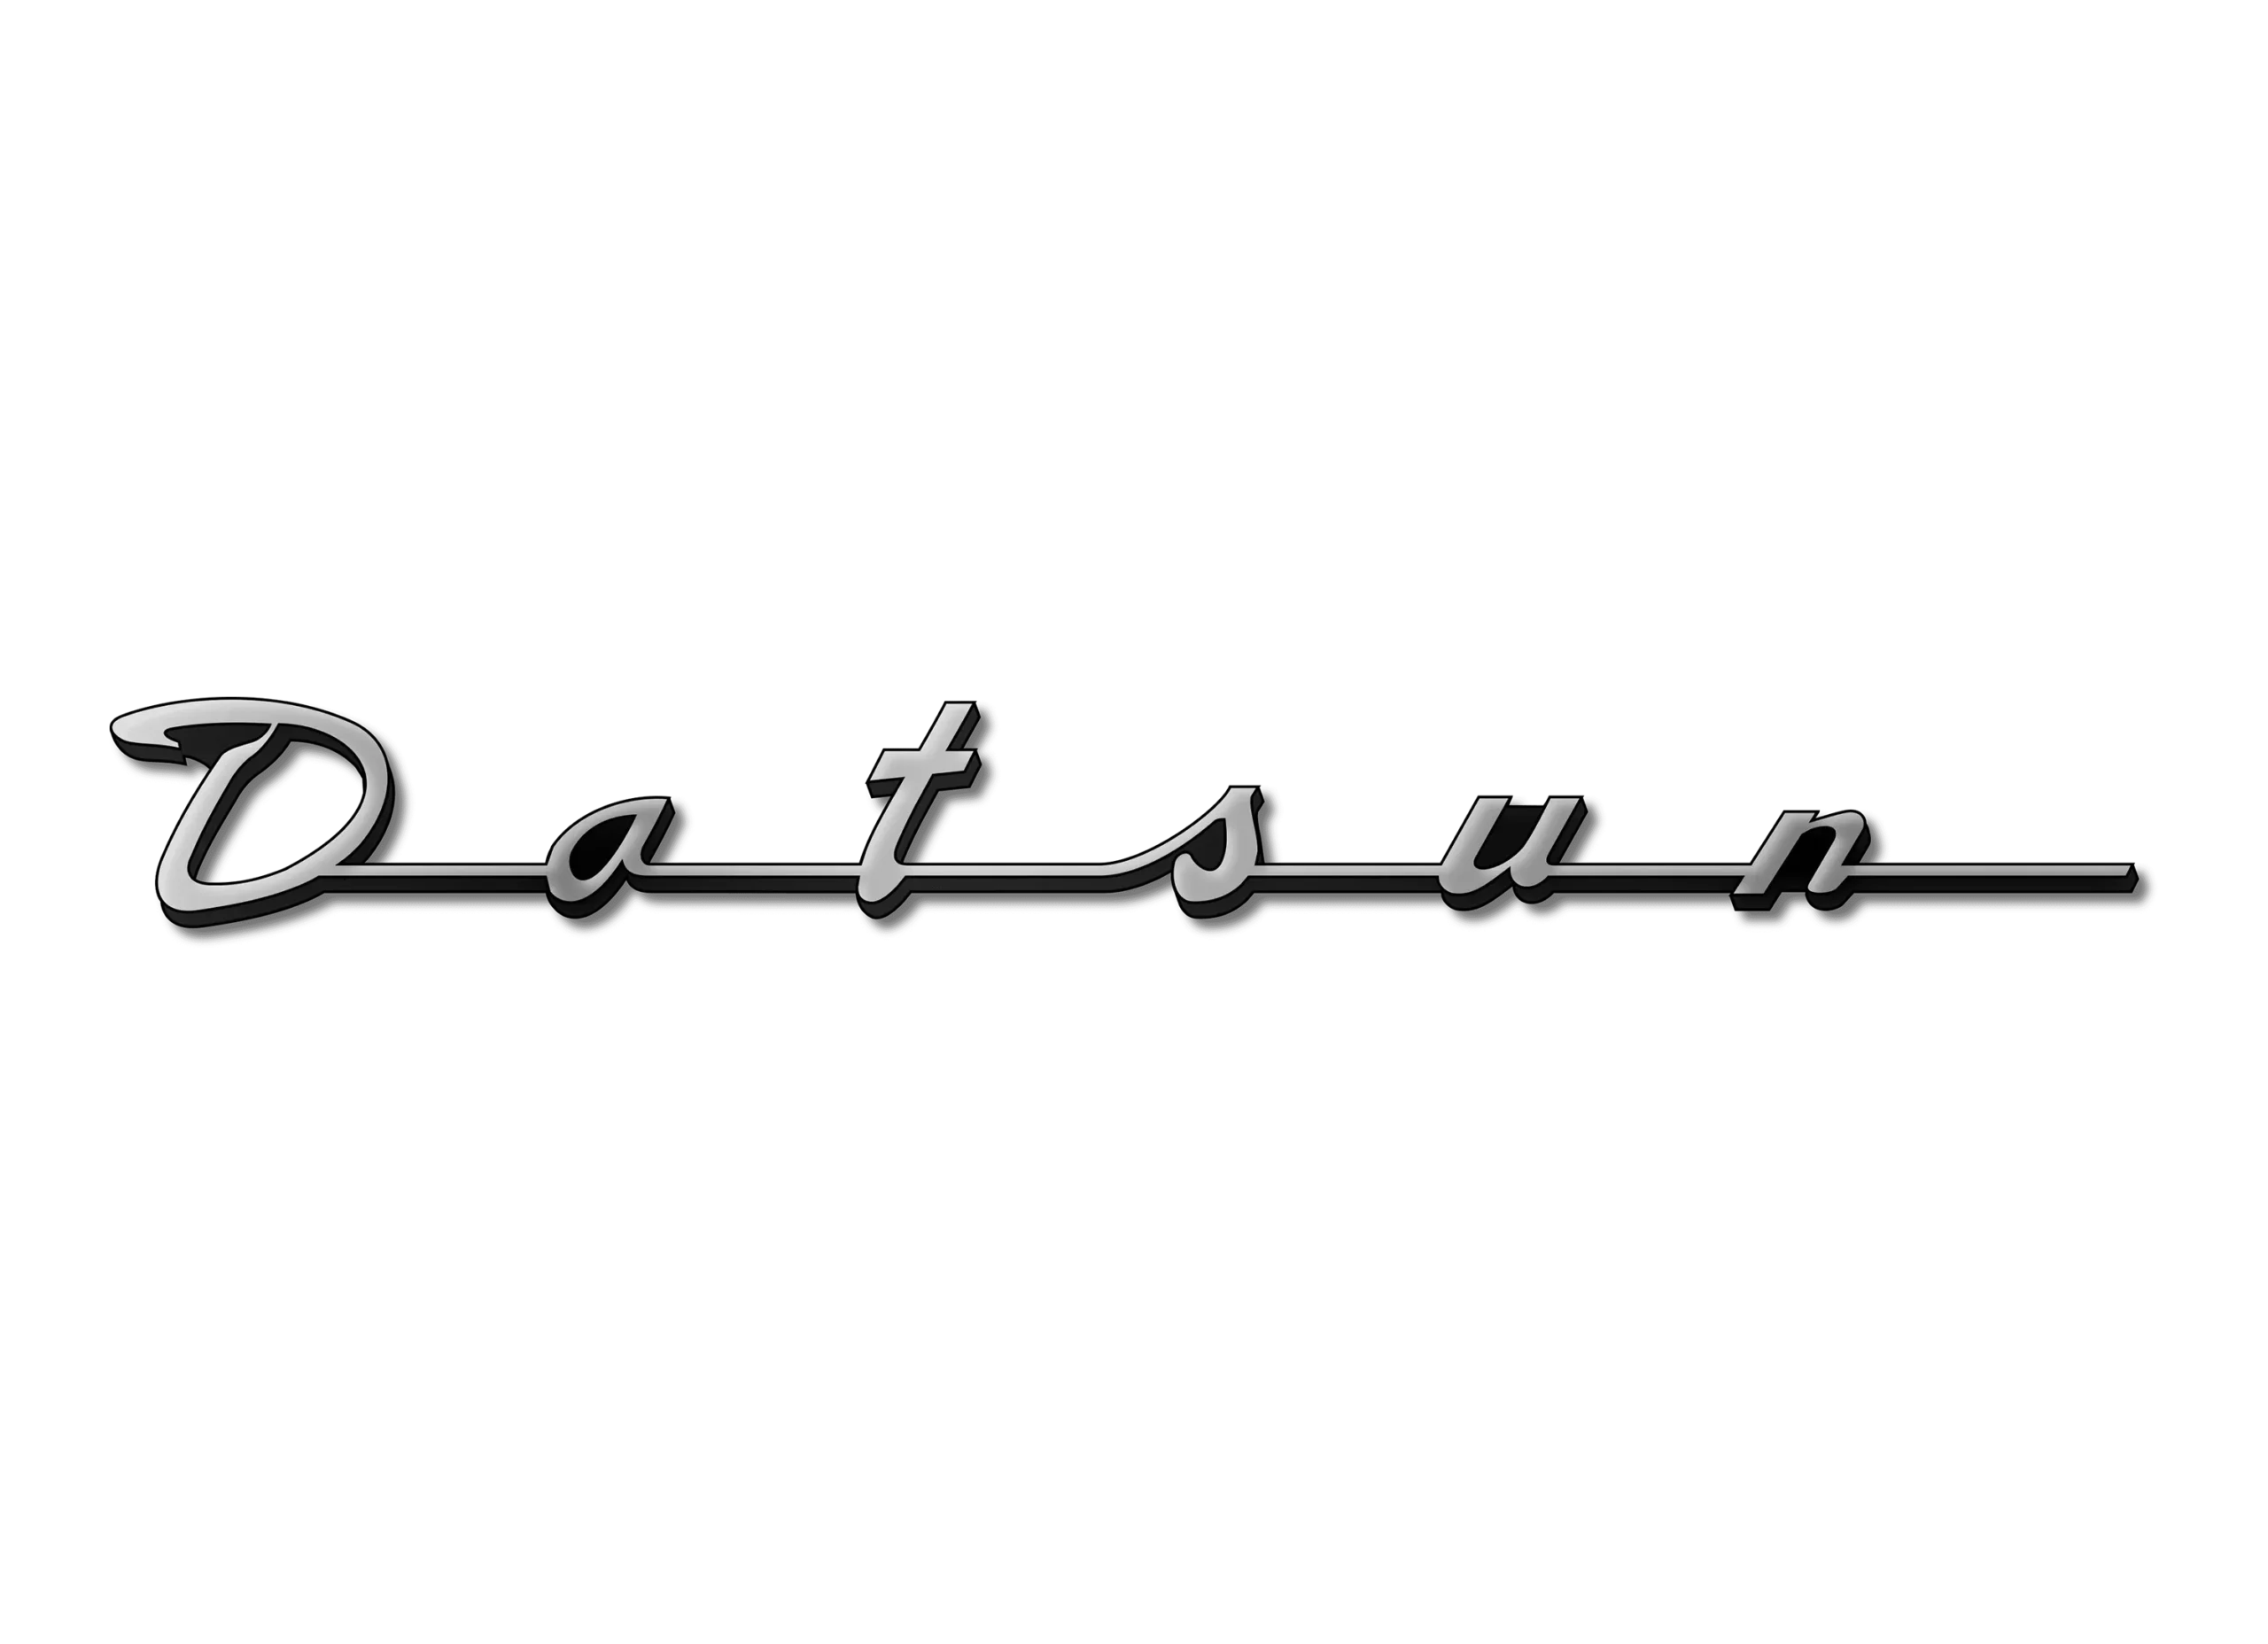 Datsun logo 1963-1964